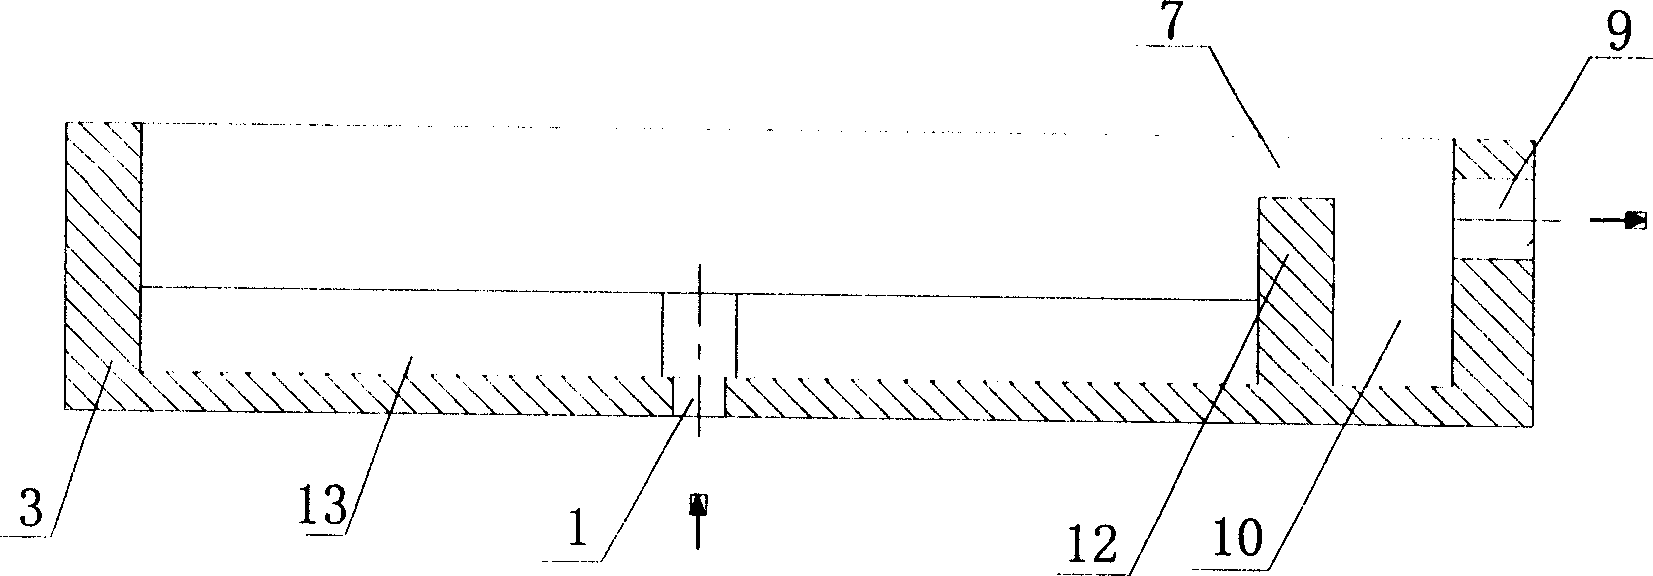 Plane capillary core evaporimeter for CPL